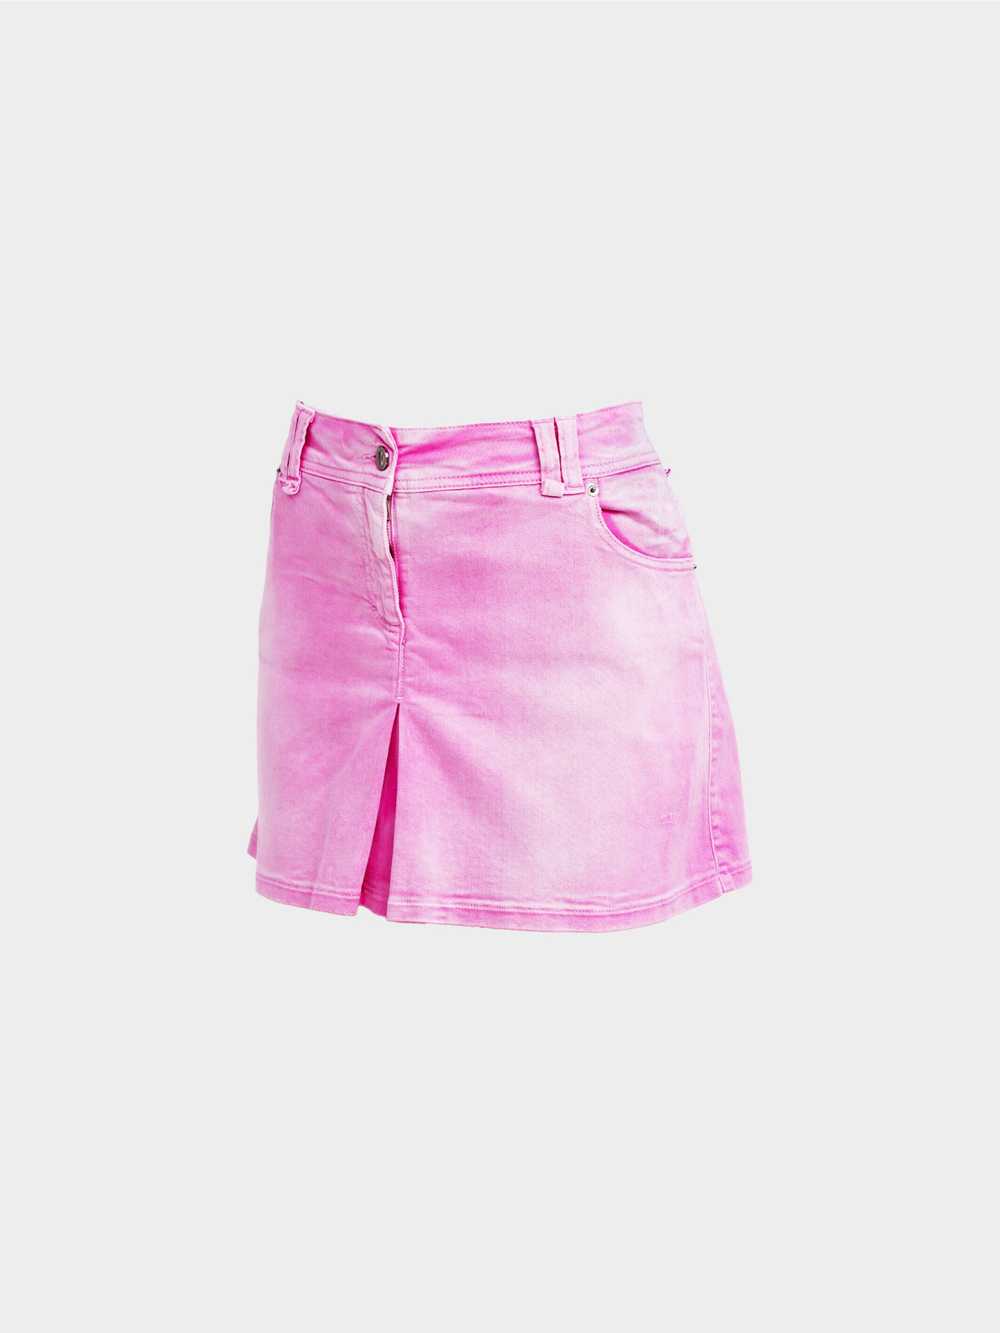 John Galliano 2000s Washed Pink Denim Mini Skirt - image 2